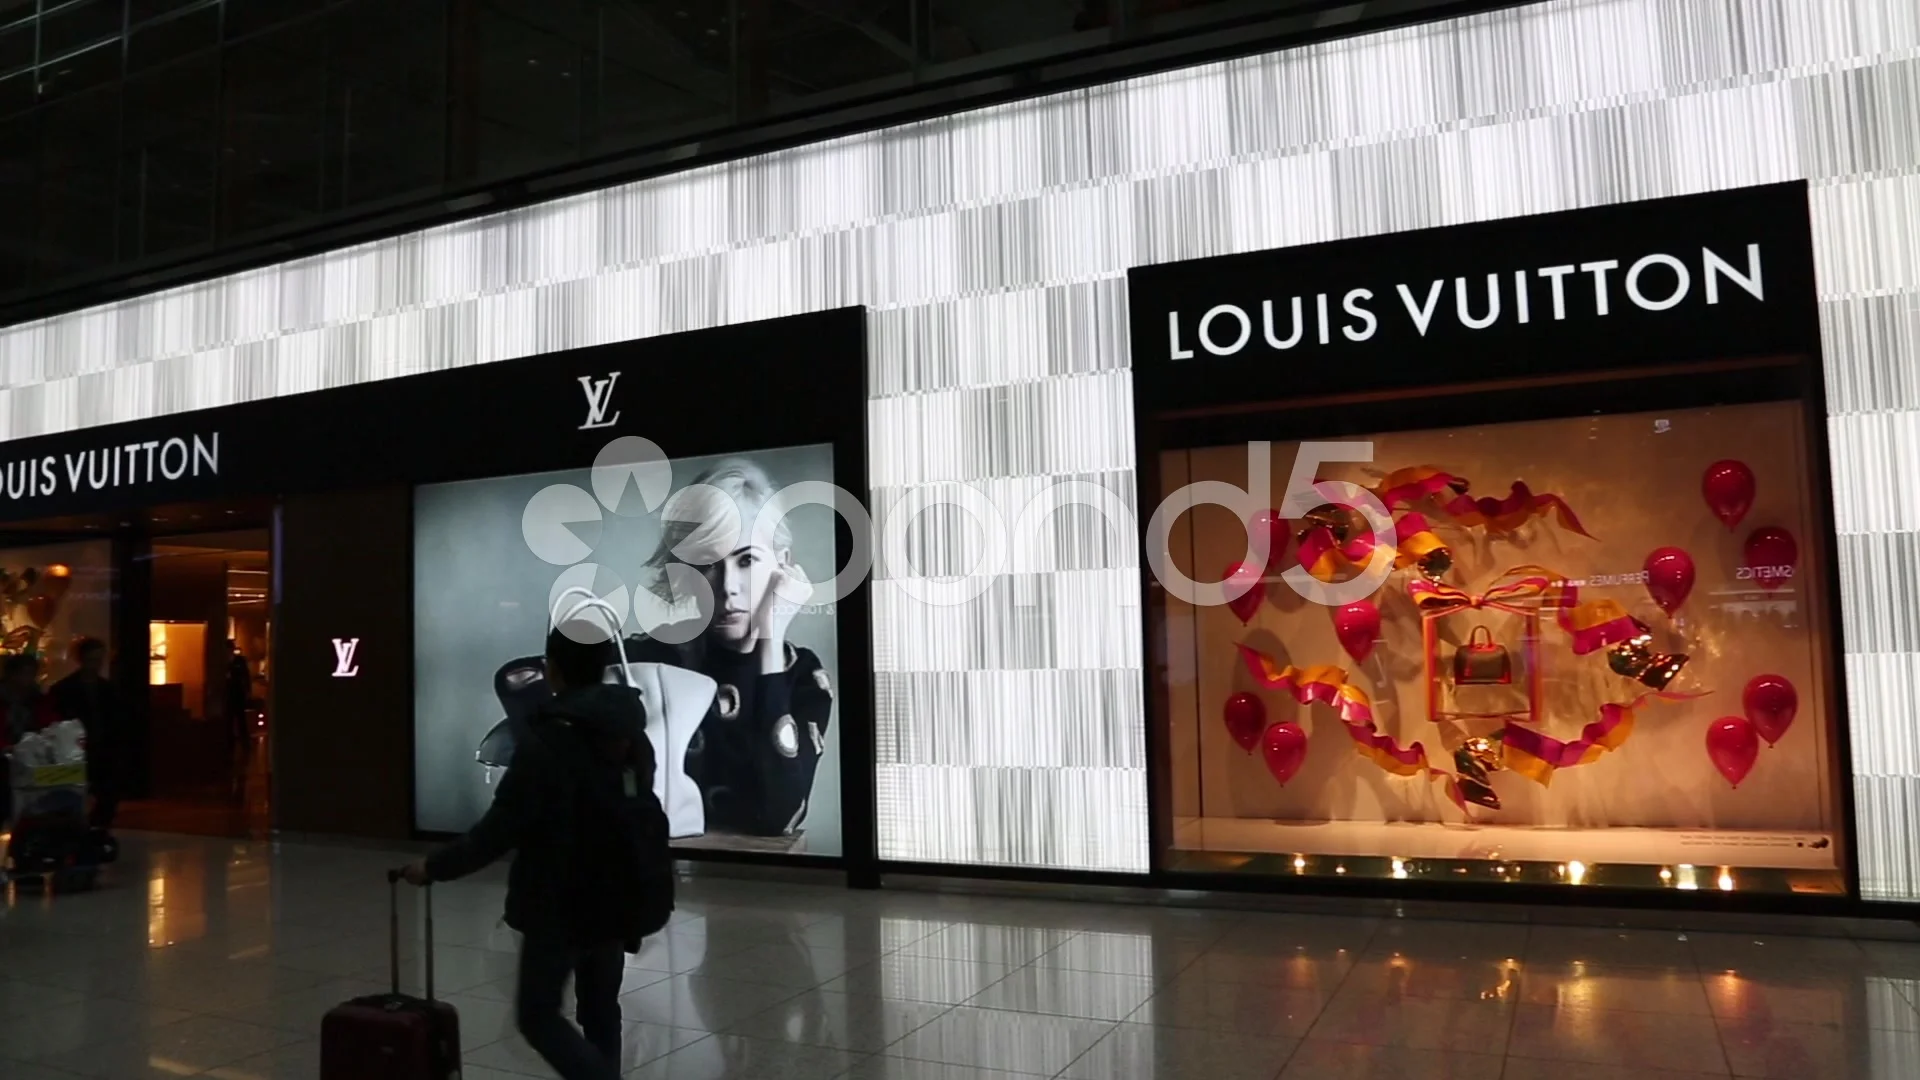 Louis Vuitton City Of Stars - PS&D